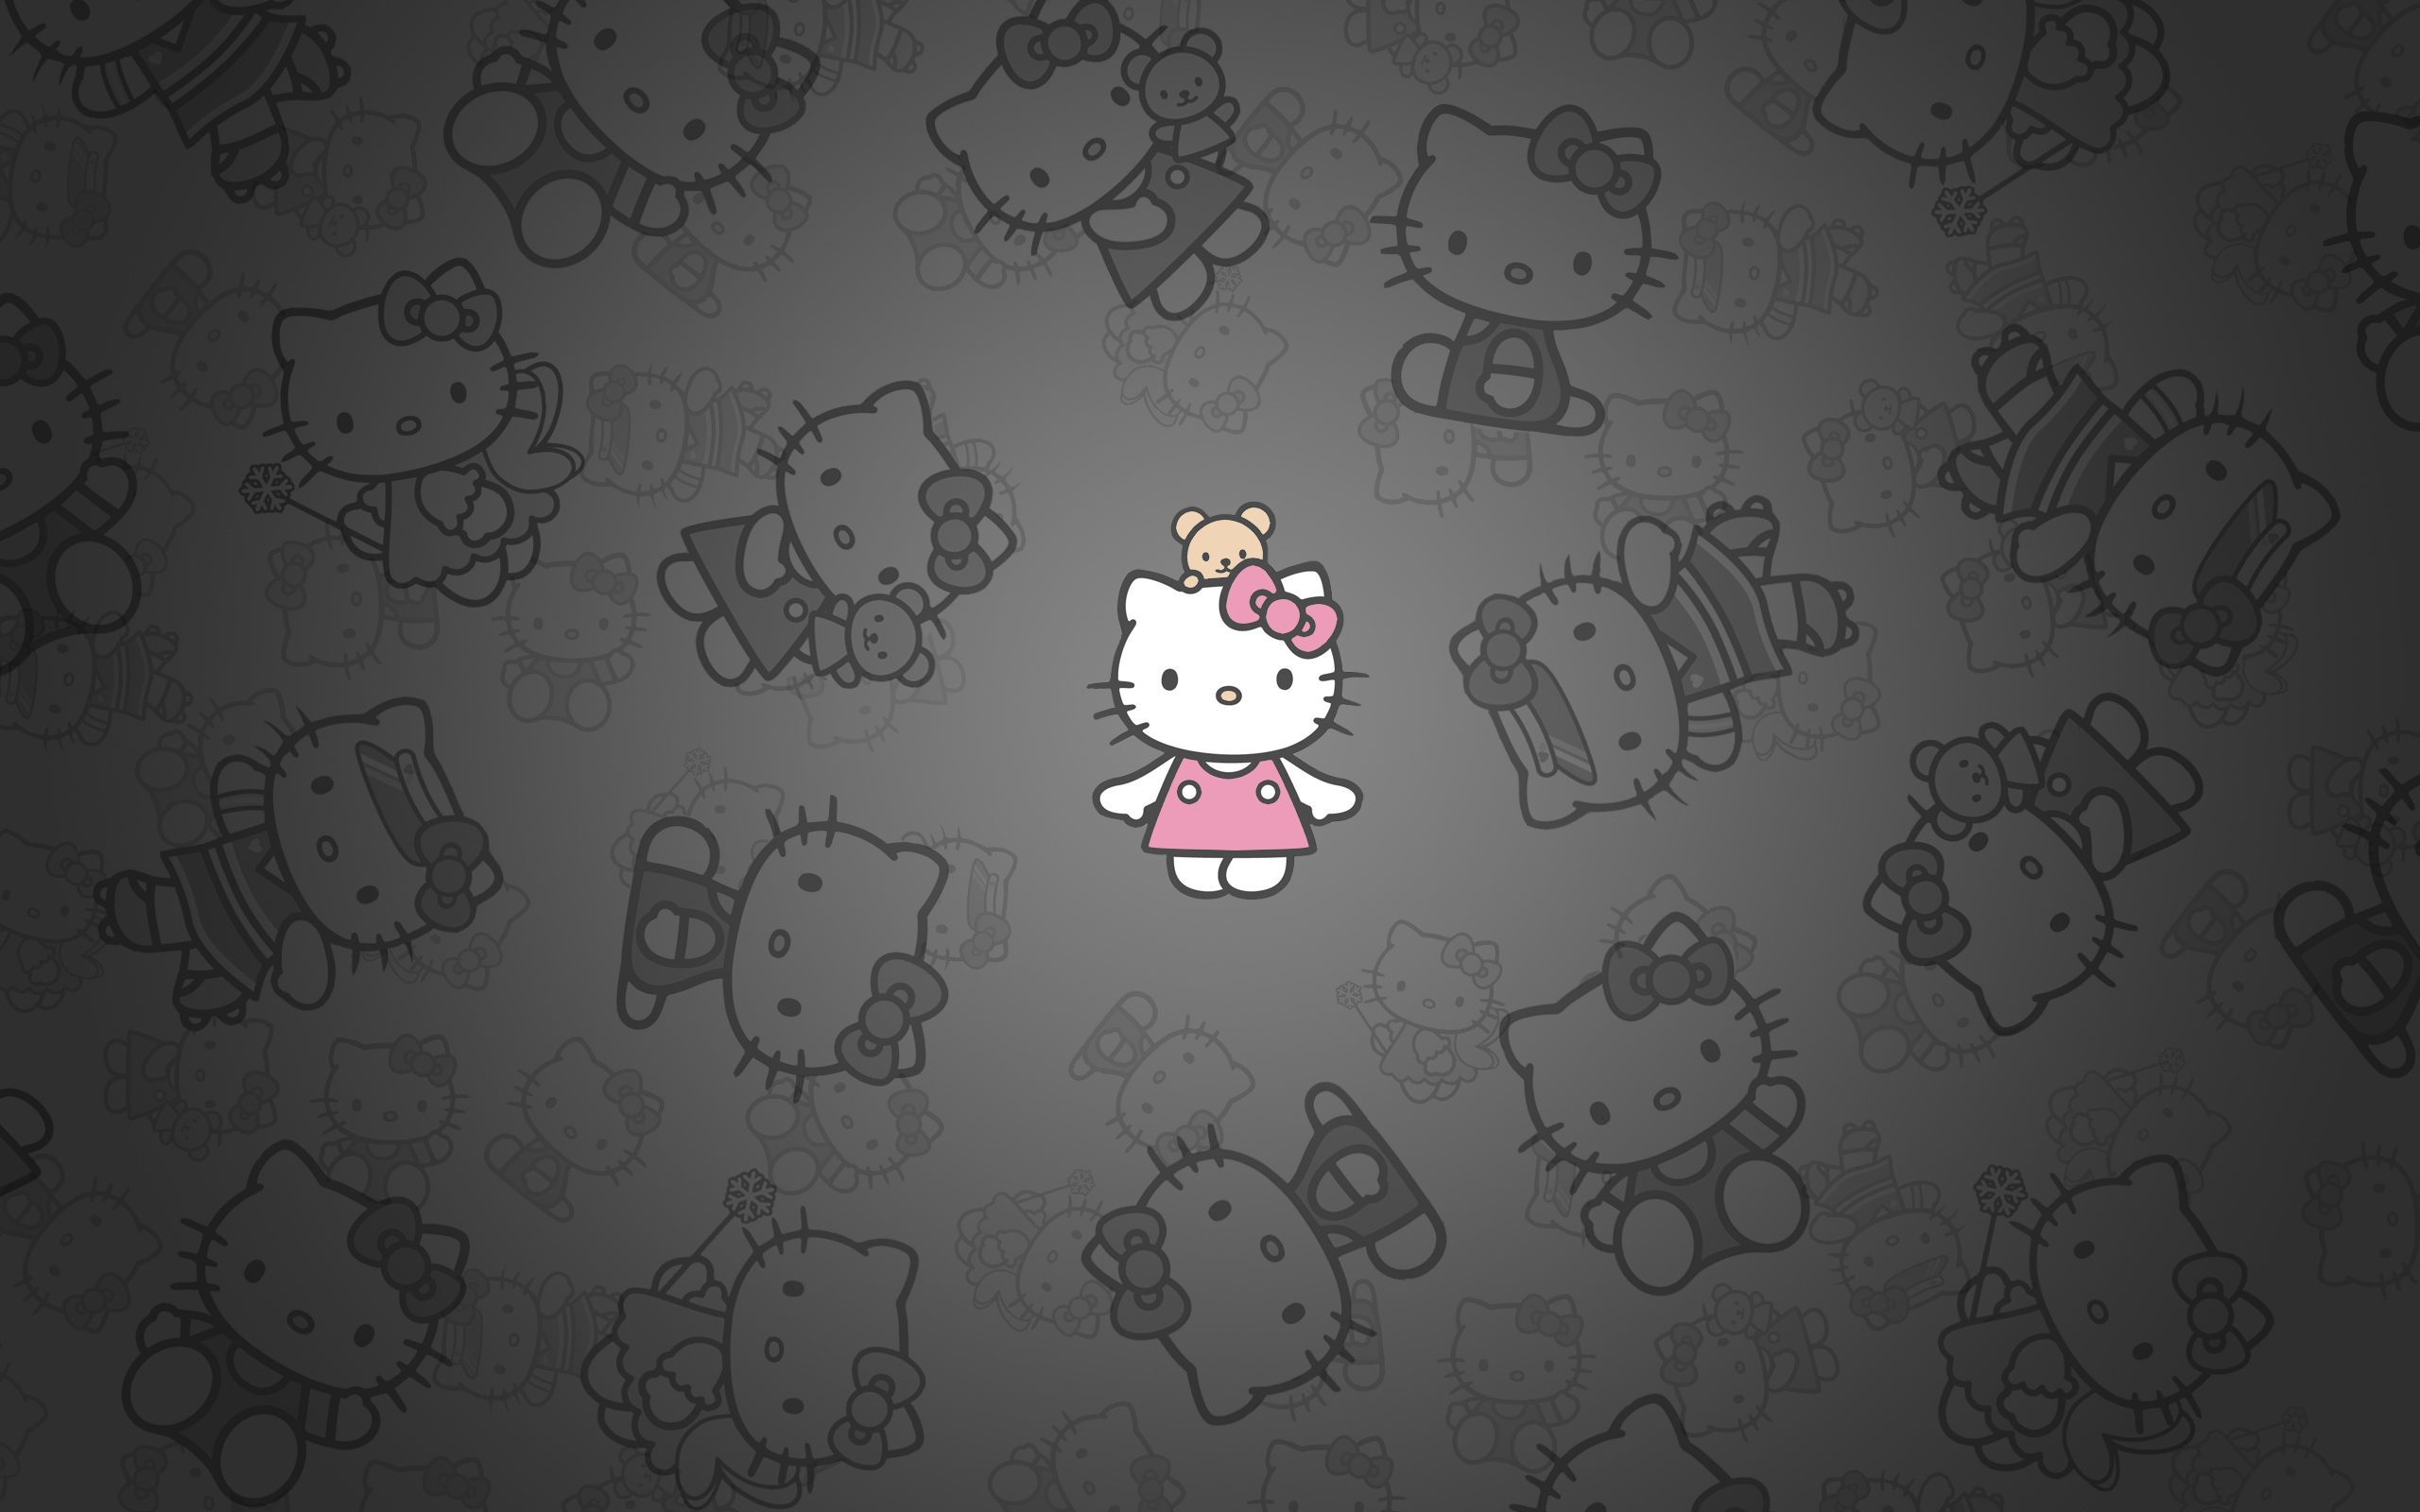 Cute Hello Kitty Wallpaper Download